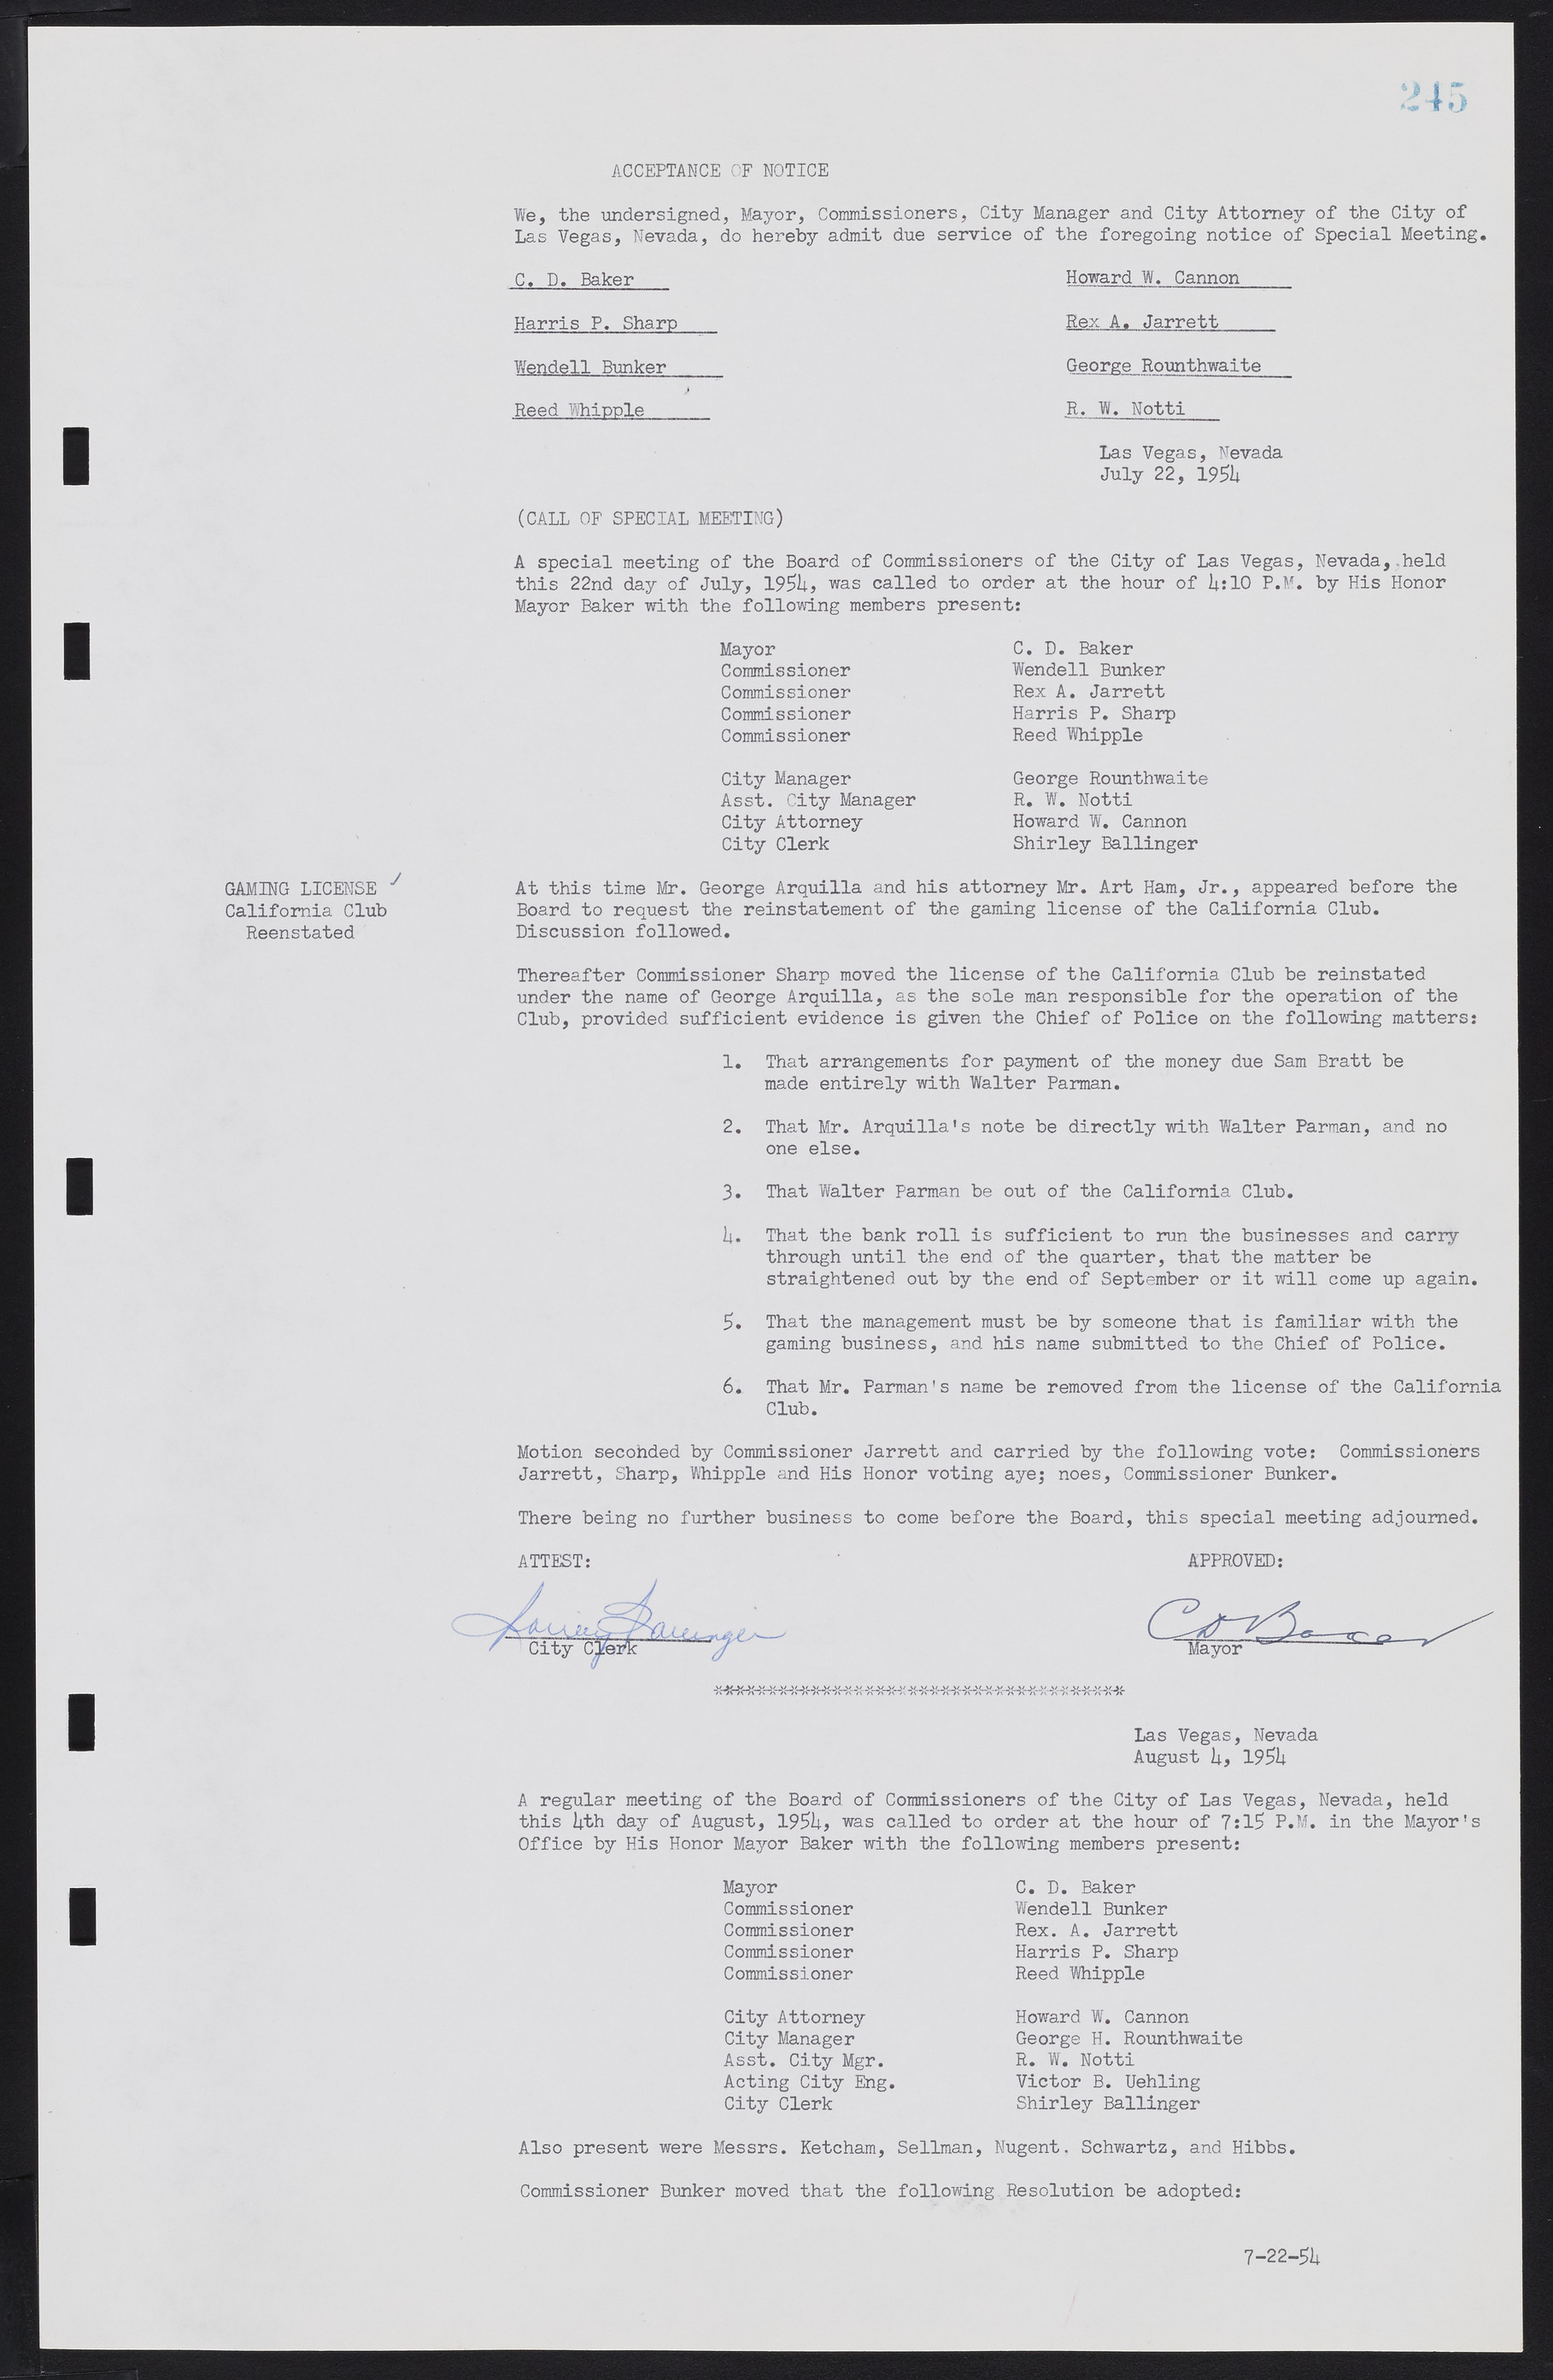 Las Vegas City Commission Minutes, February 17, 1954 to September 21, 1955, lvc000009-251